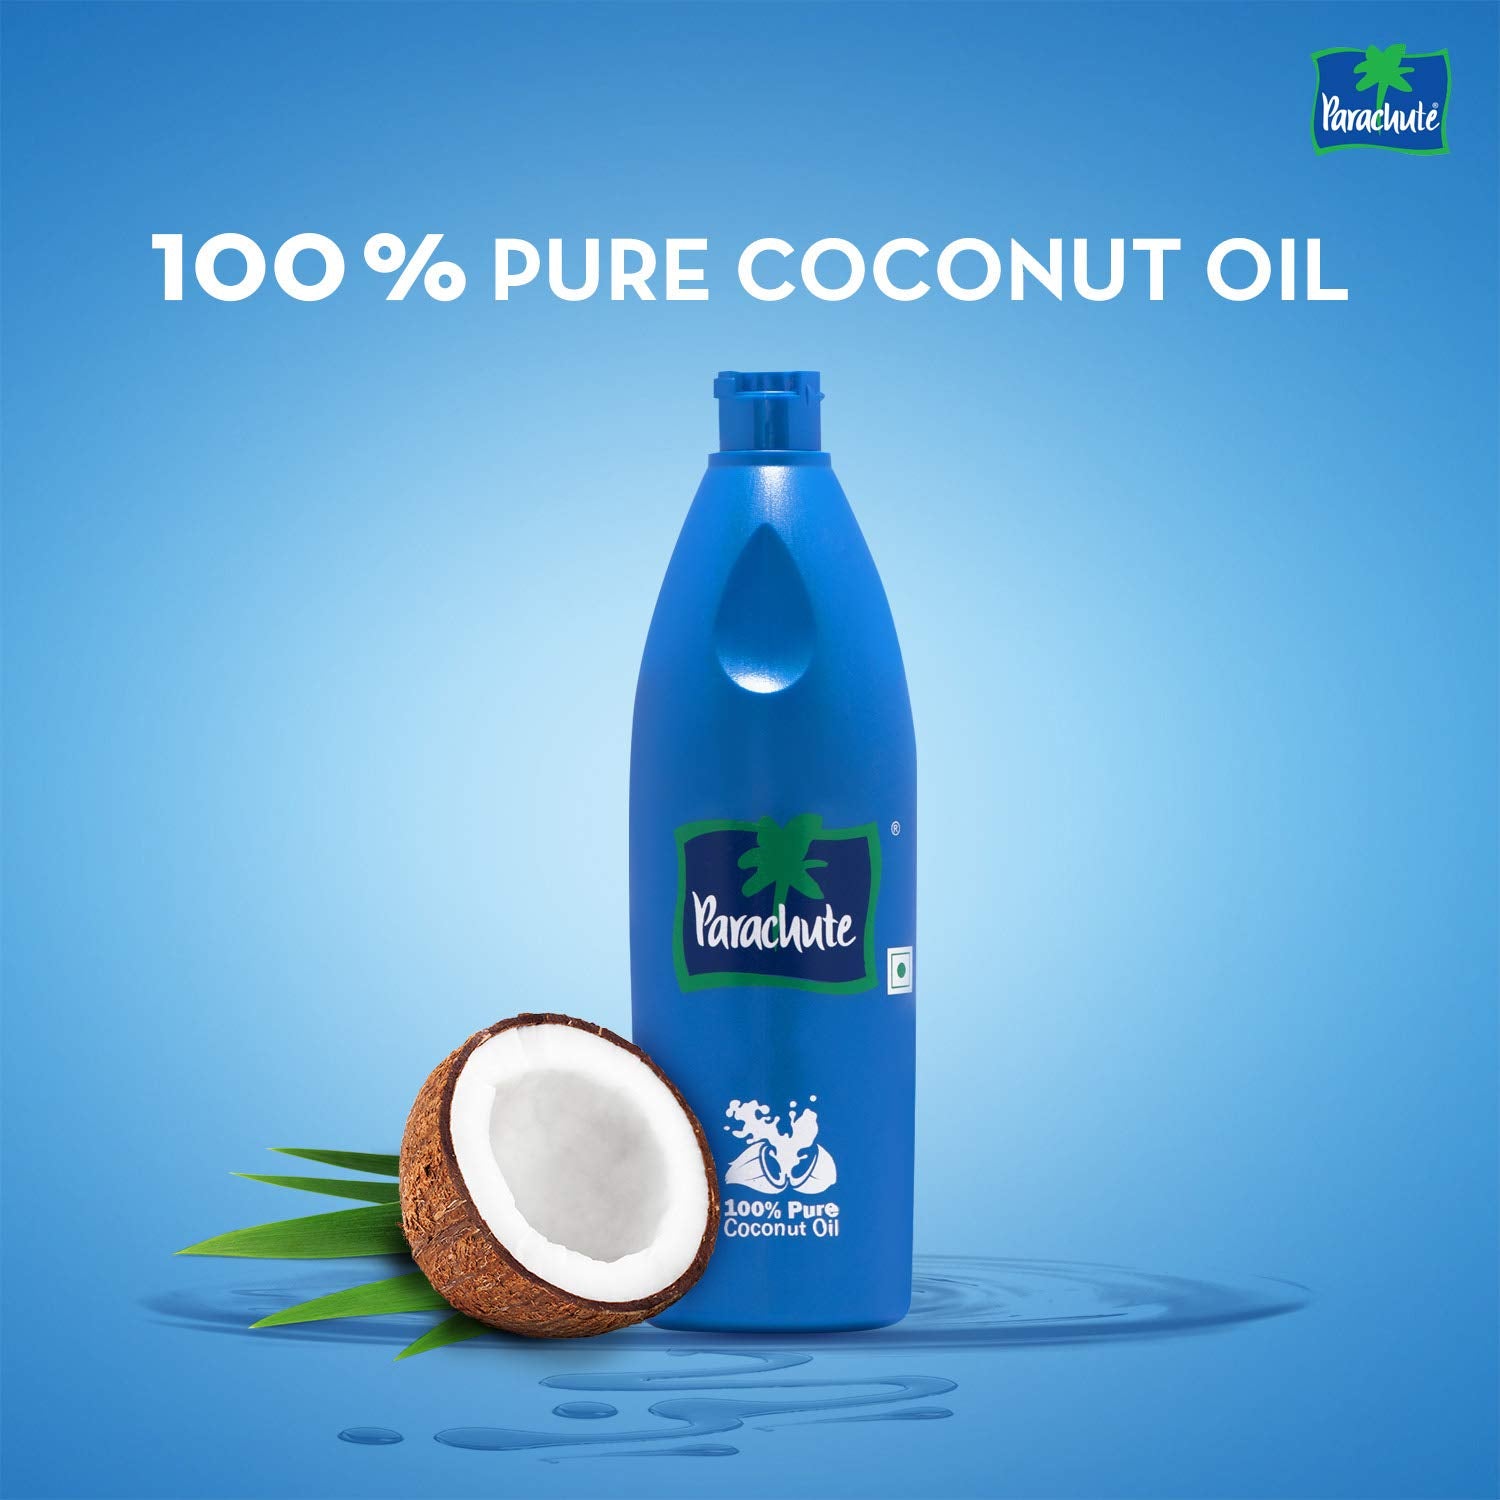 Parachute Coconut Oil Bottle, 250 ml SU045